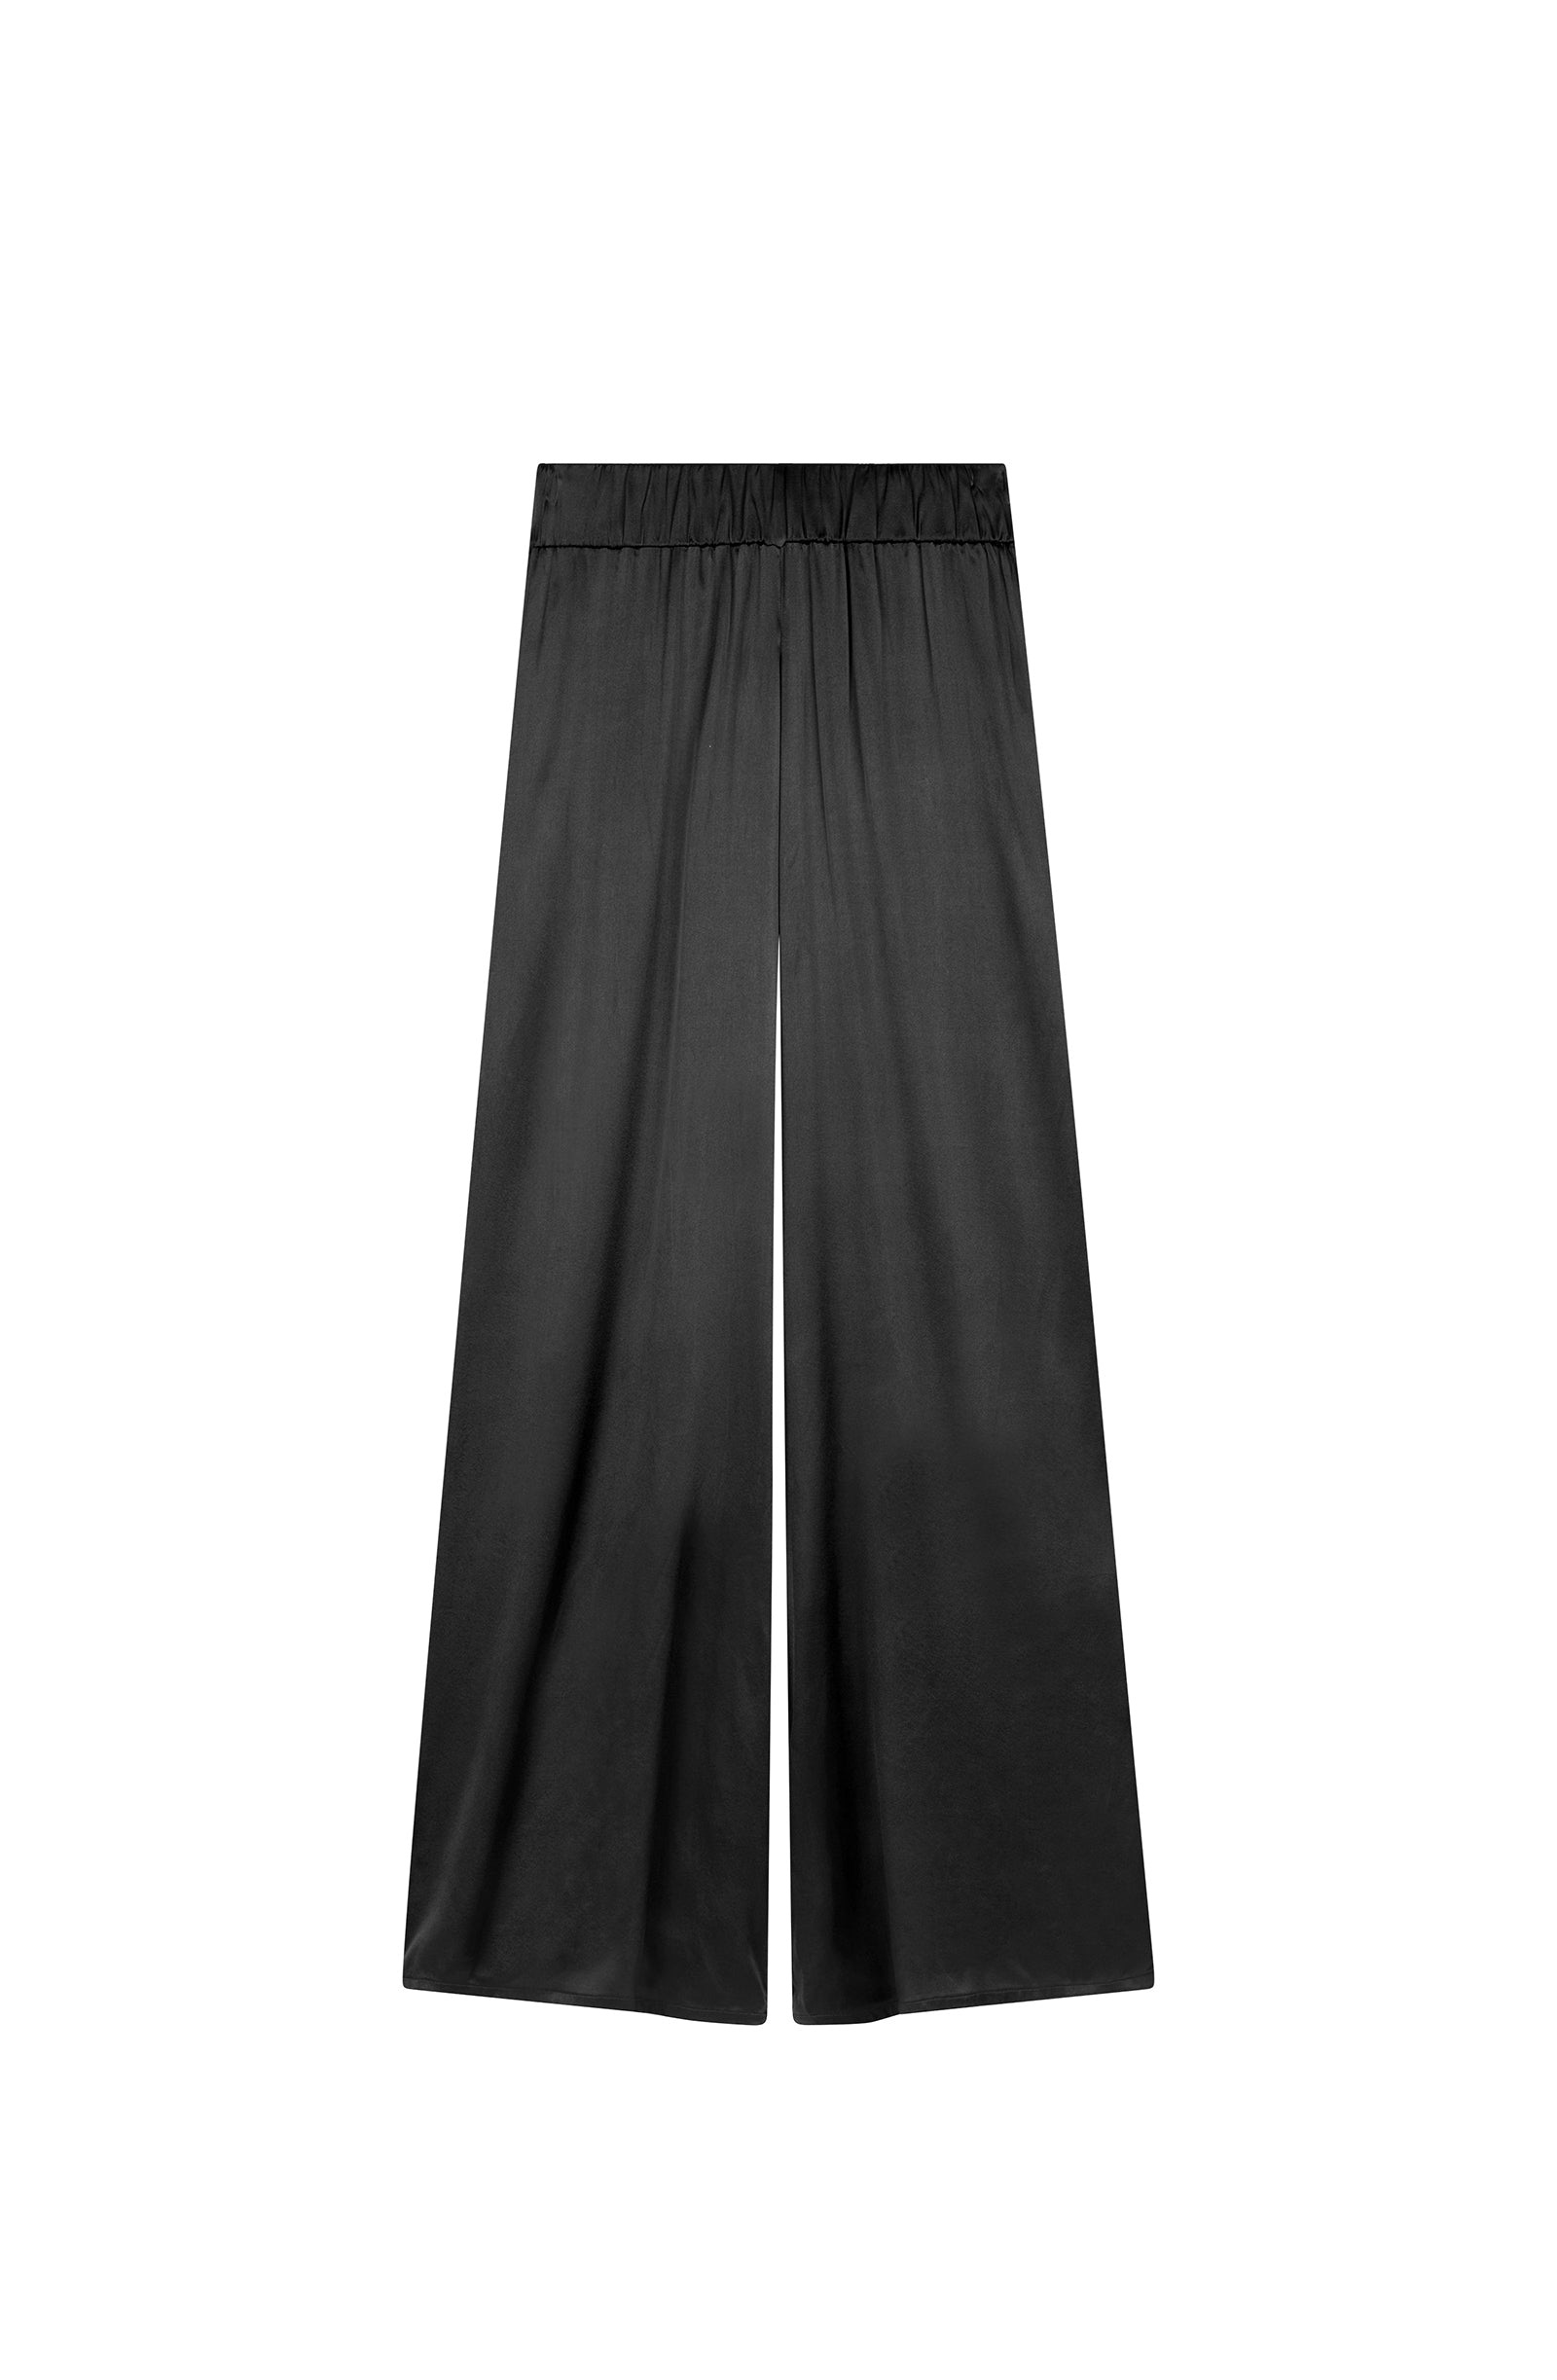 tom Wide black silk trousers